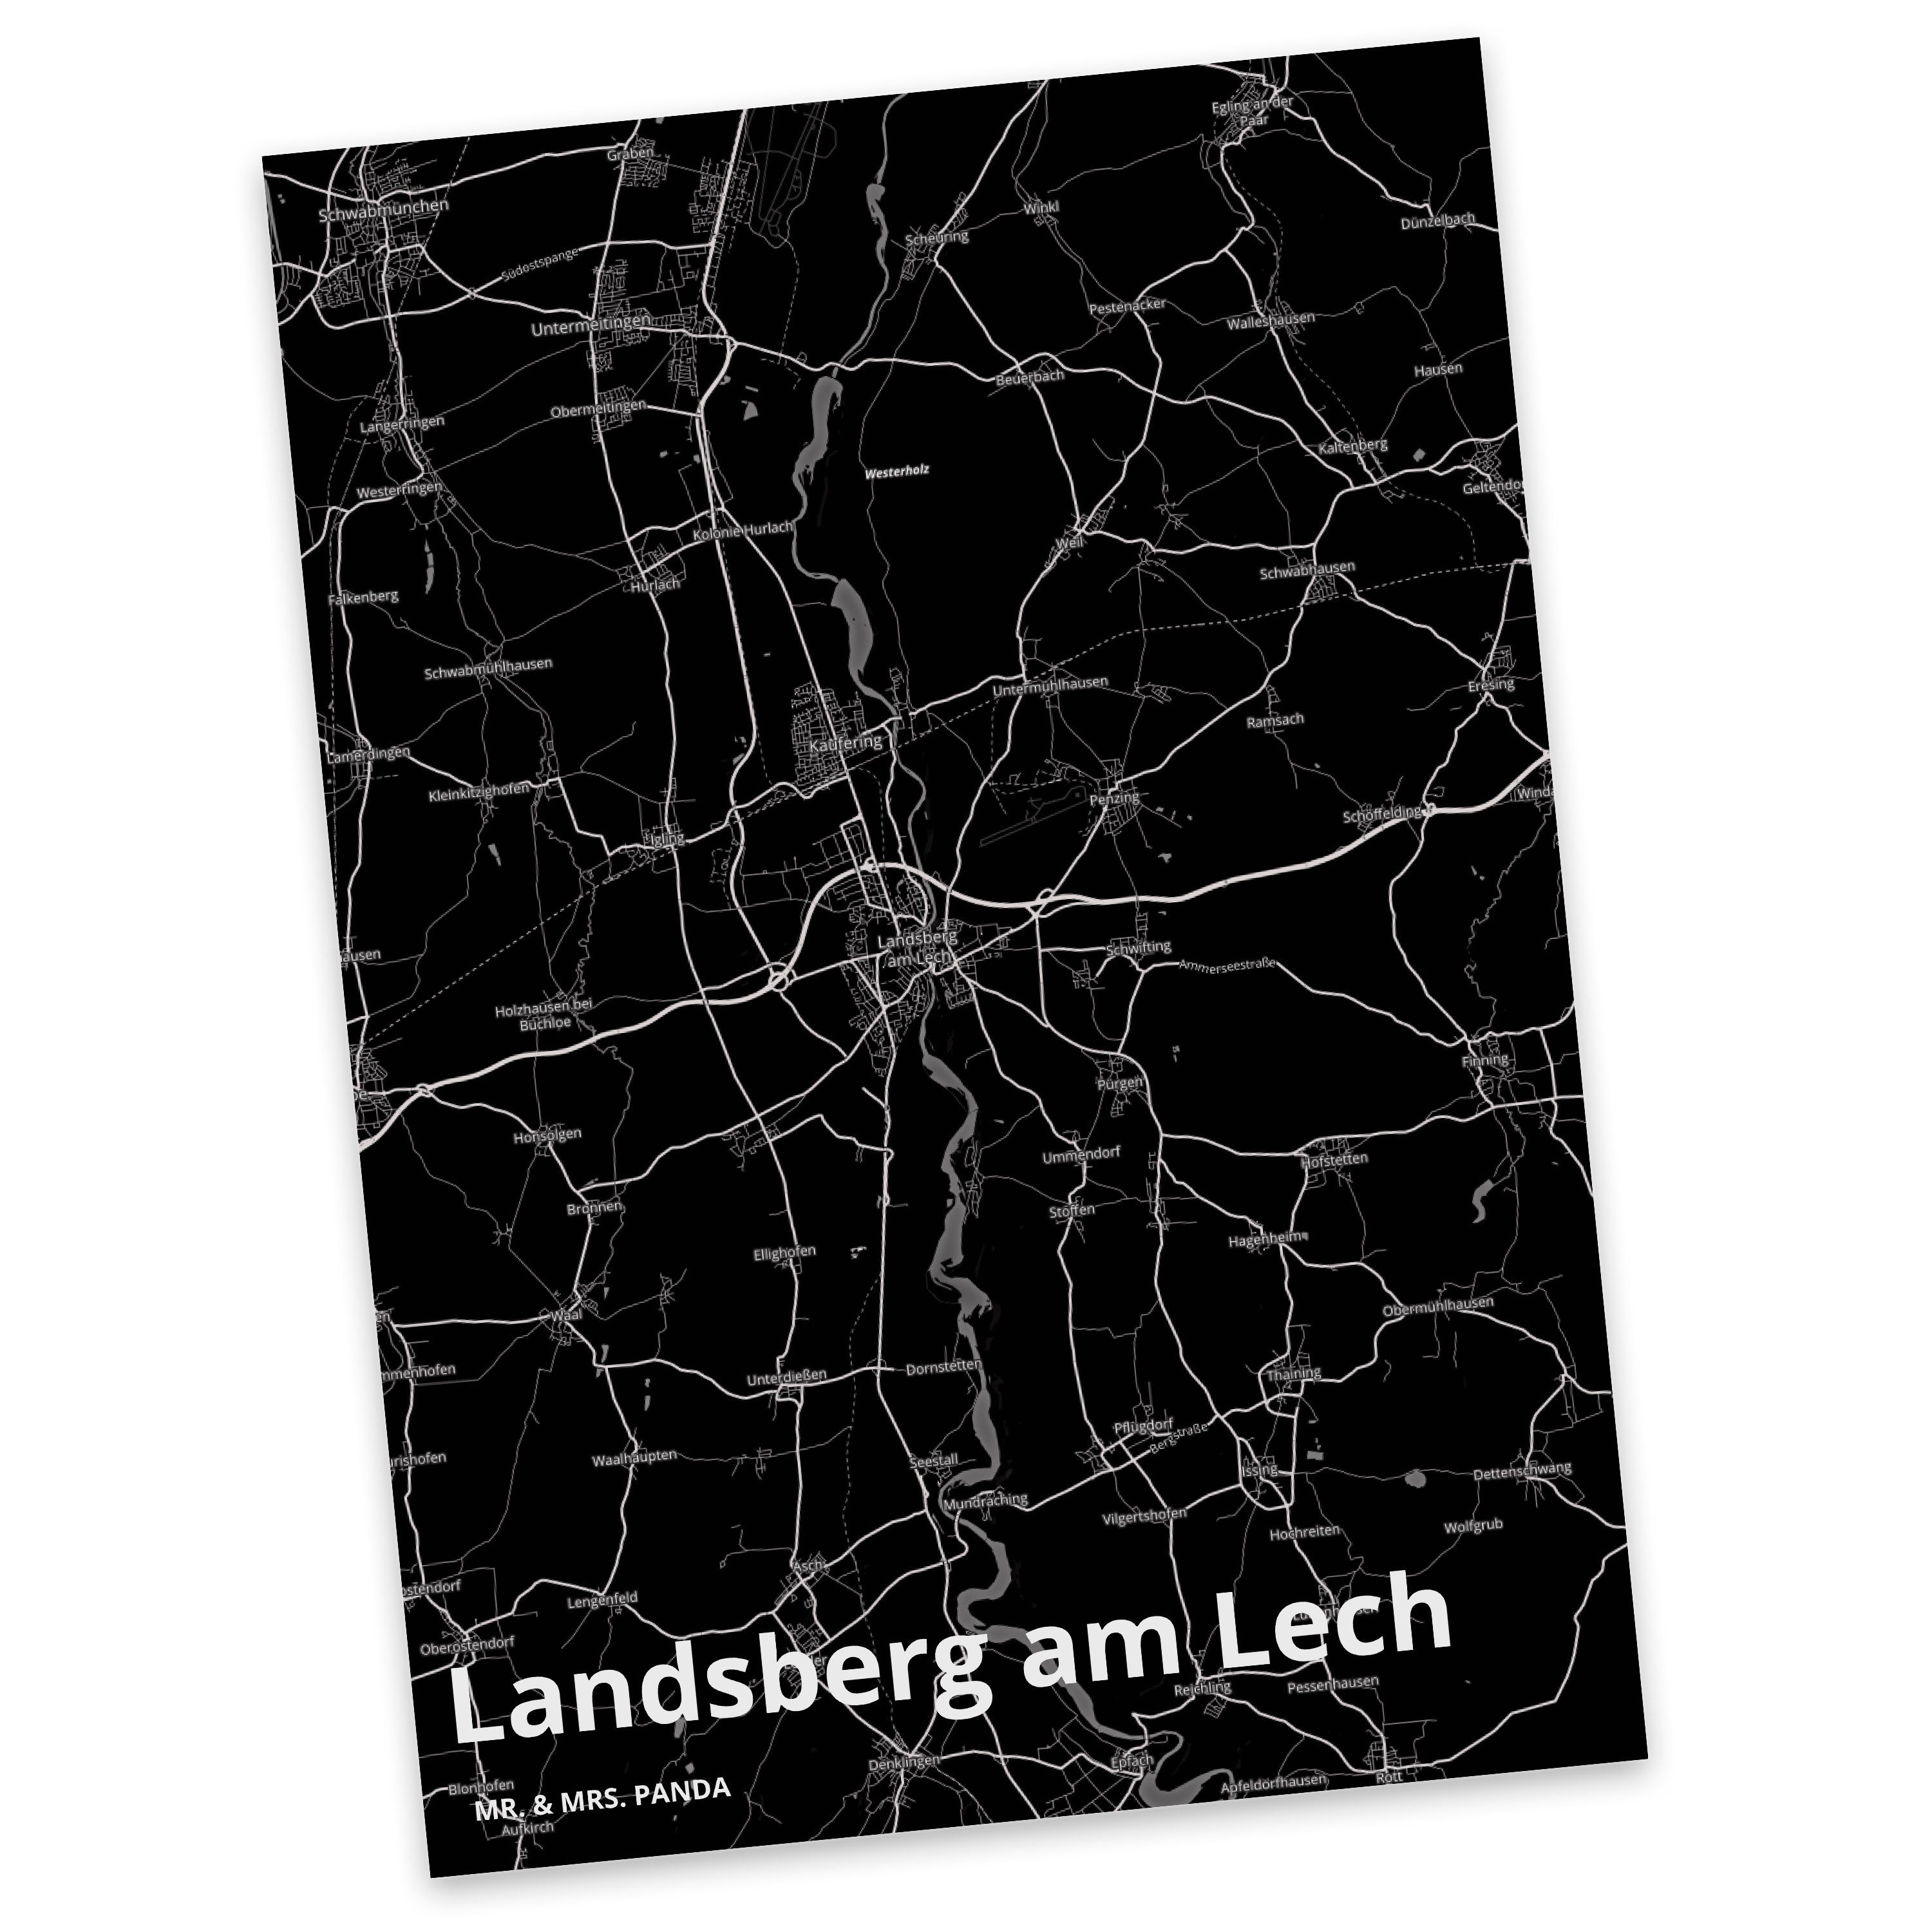 Mr. & Mrs. Panda - Landsberg Dorf Stadt Lech Dankeskarte, Geschenk, Postkarte Ort, Stadt, Kar am